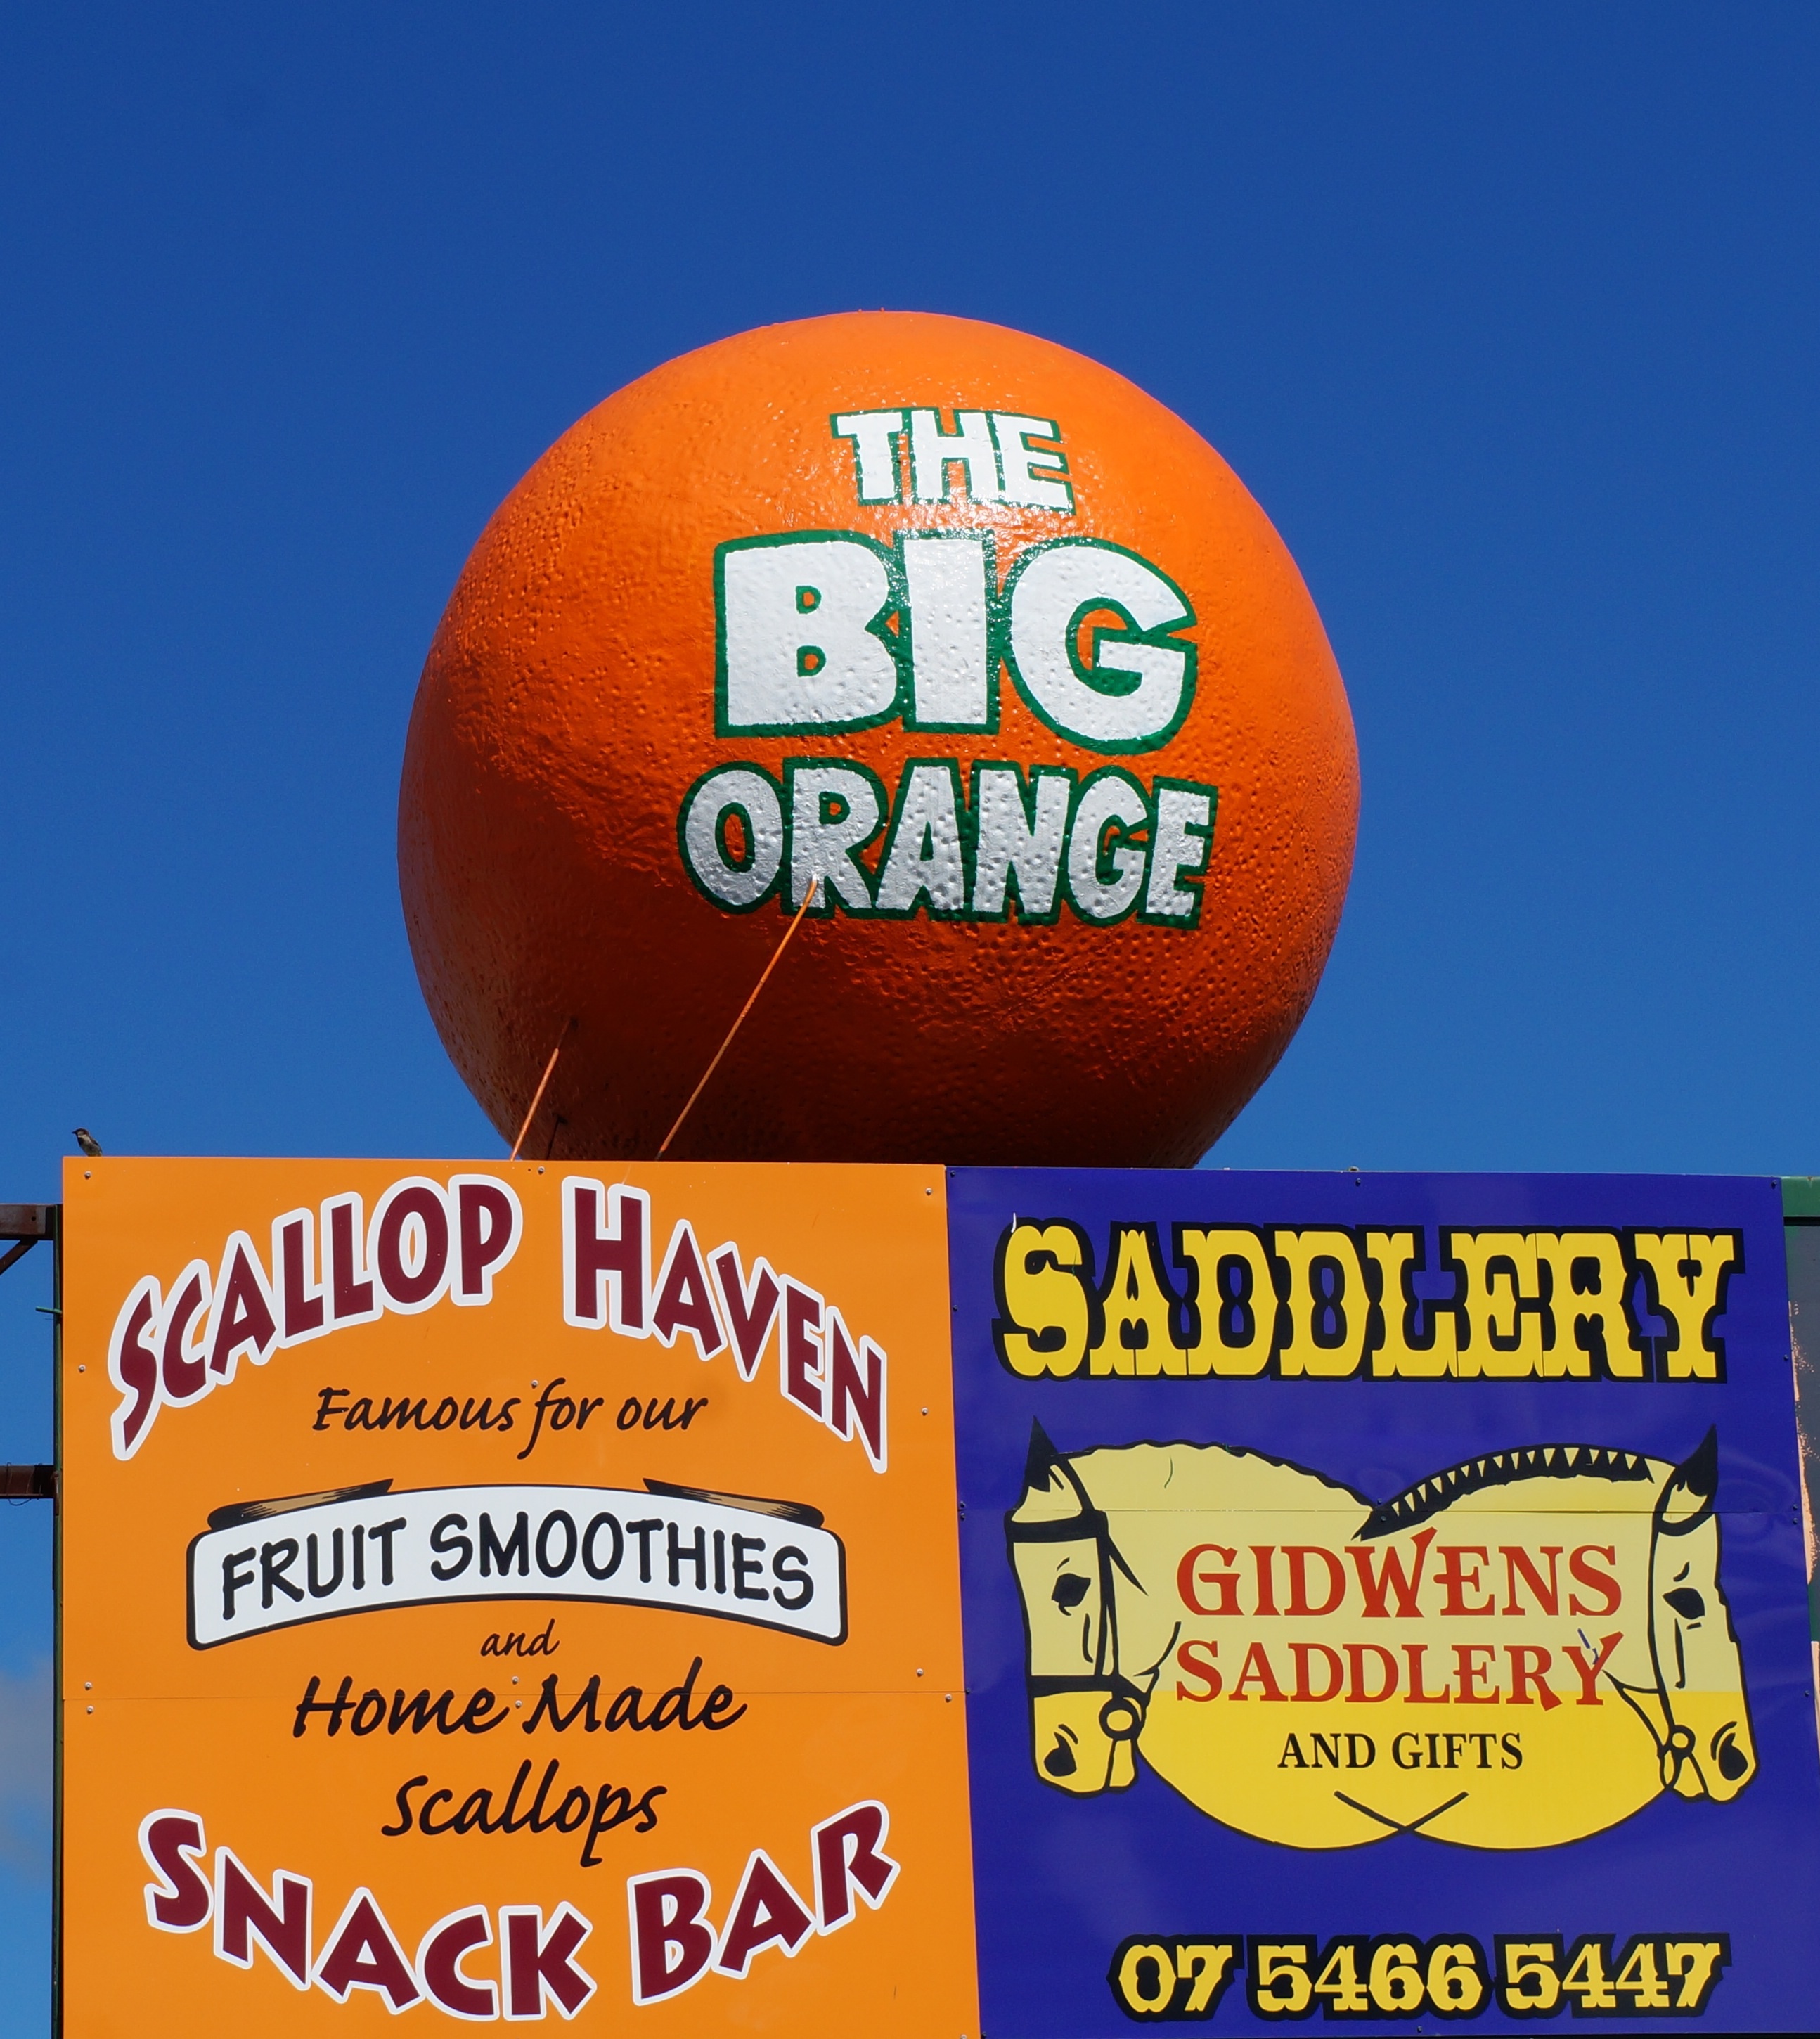 File:The Big Orange.jpg - Wikipedia